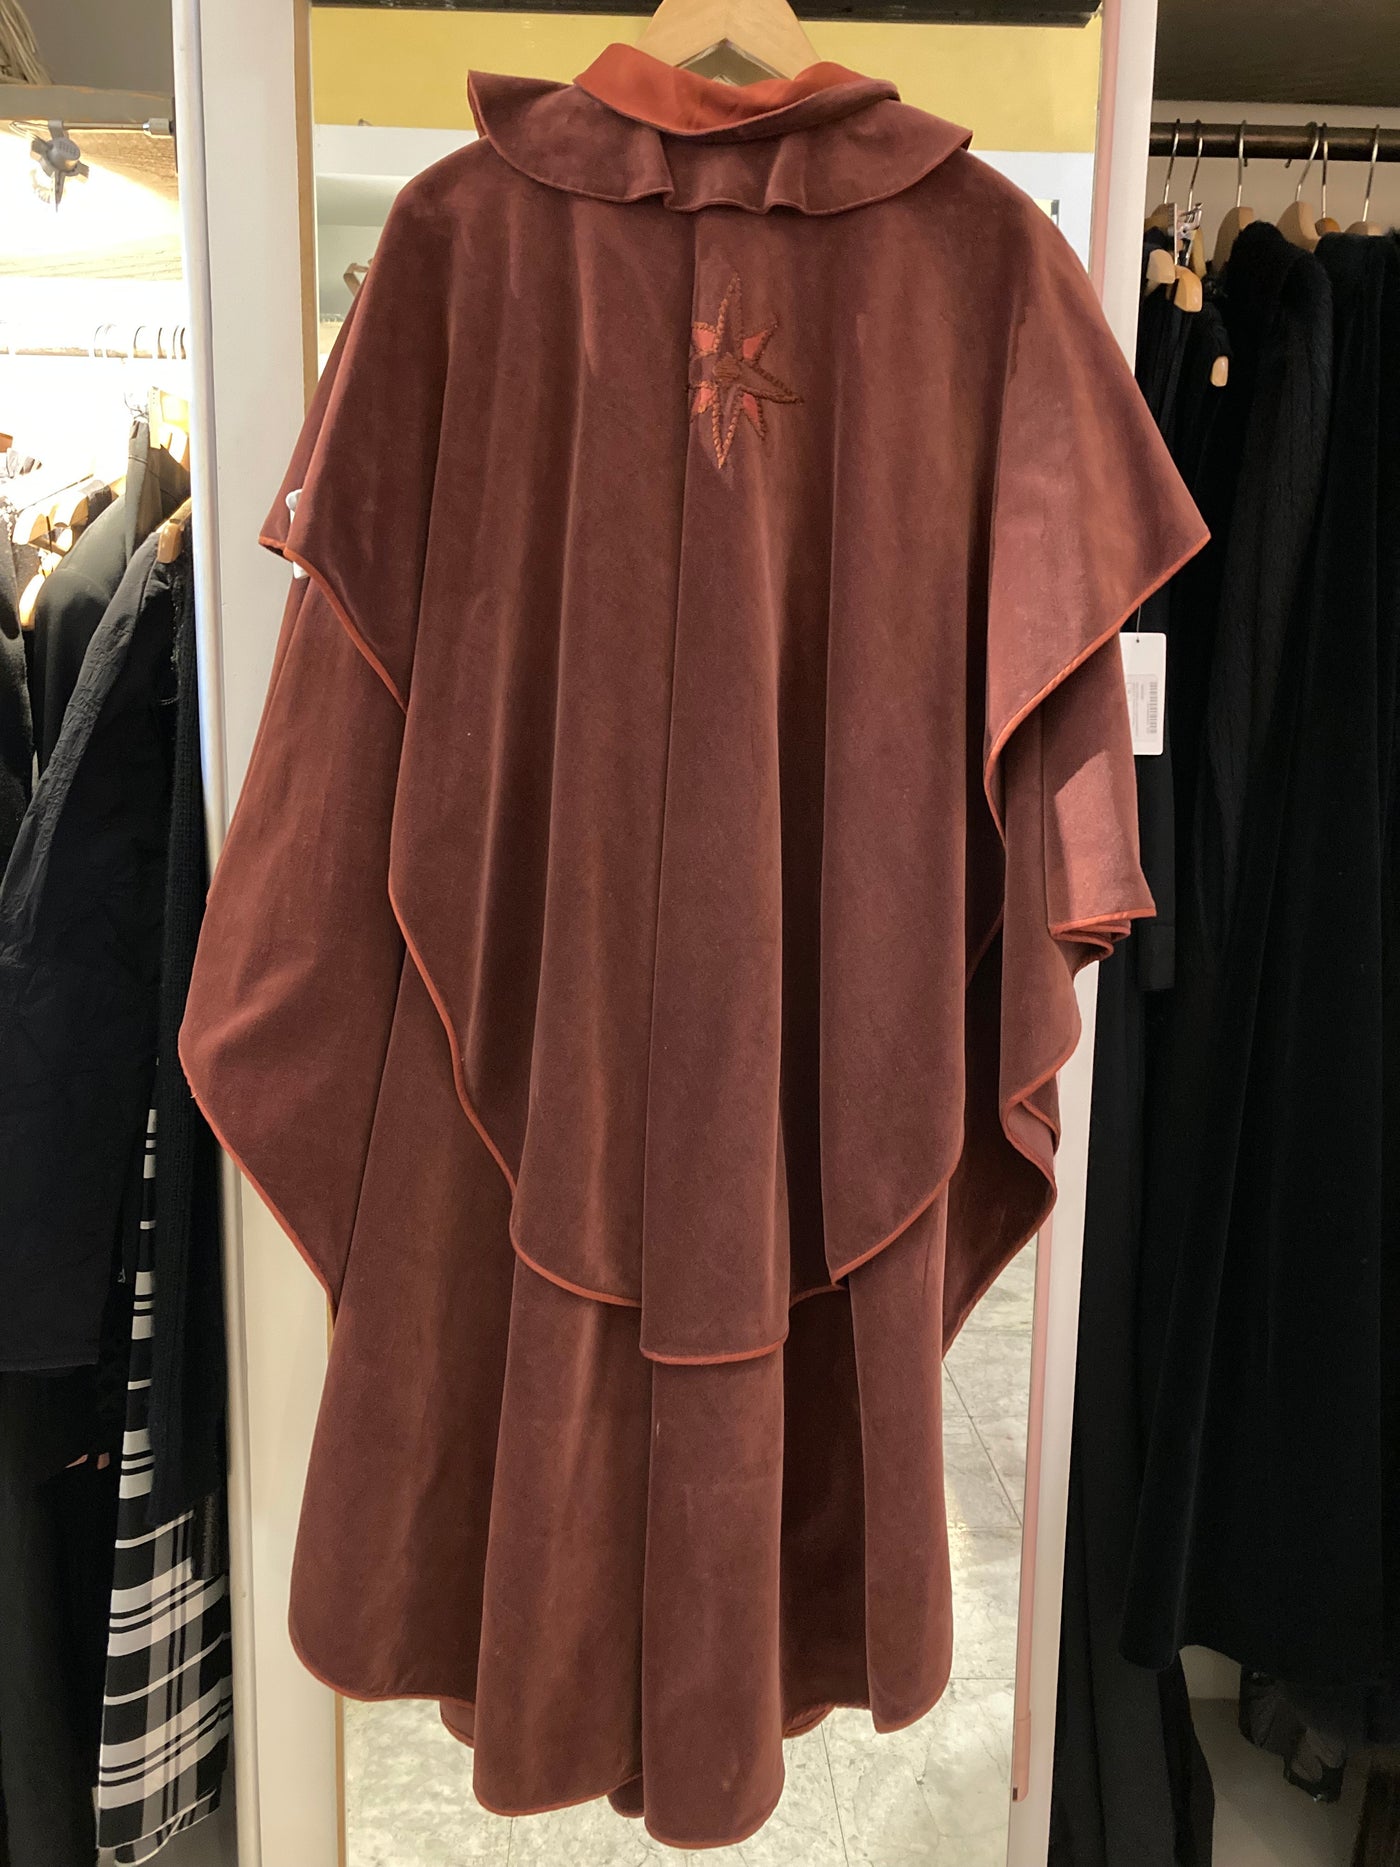 Gianni Versace cape